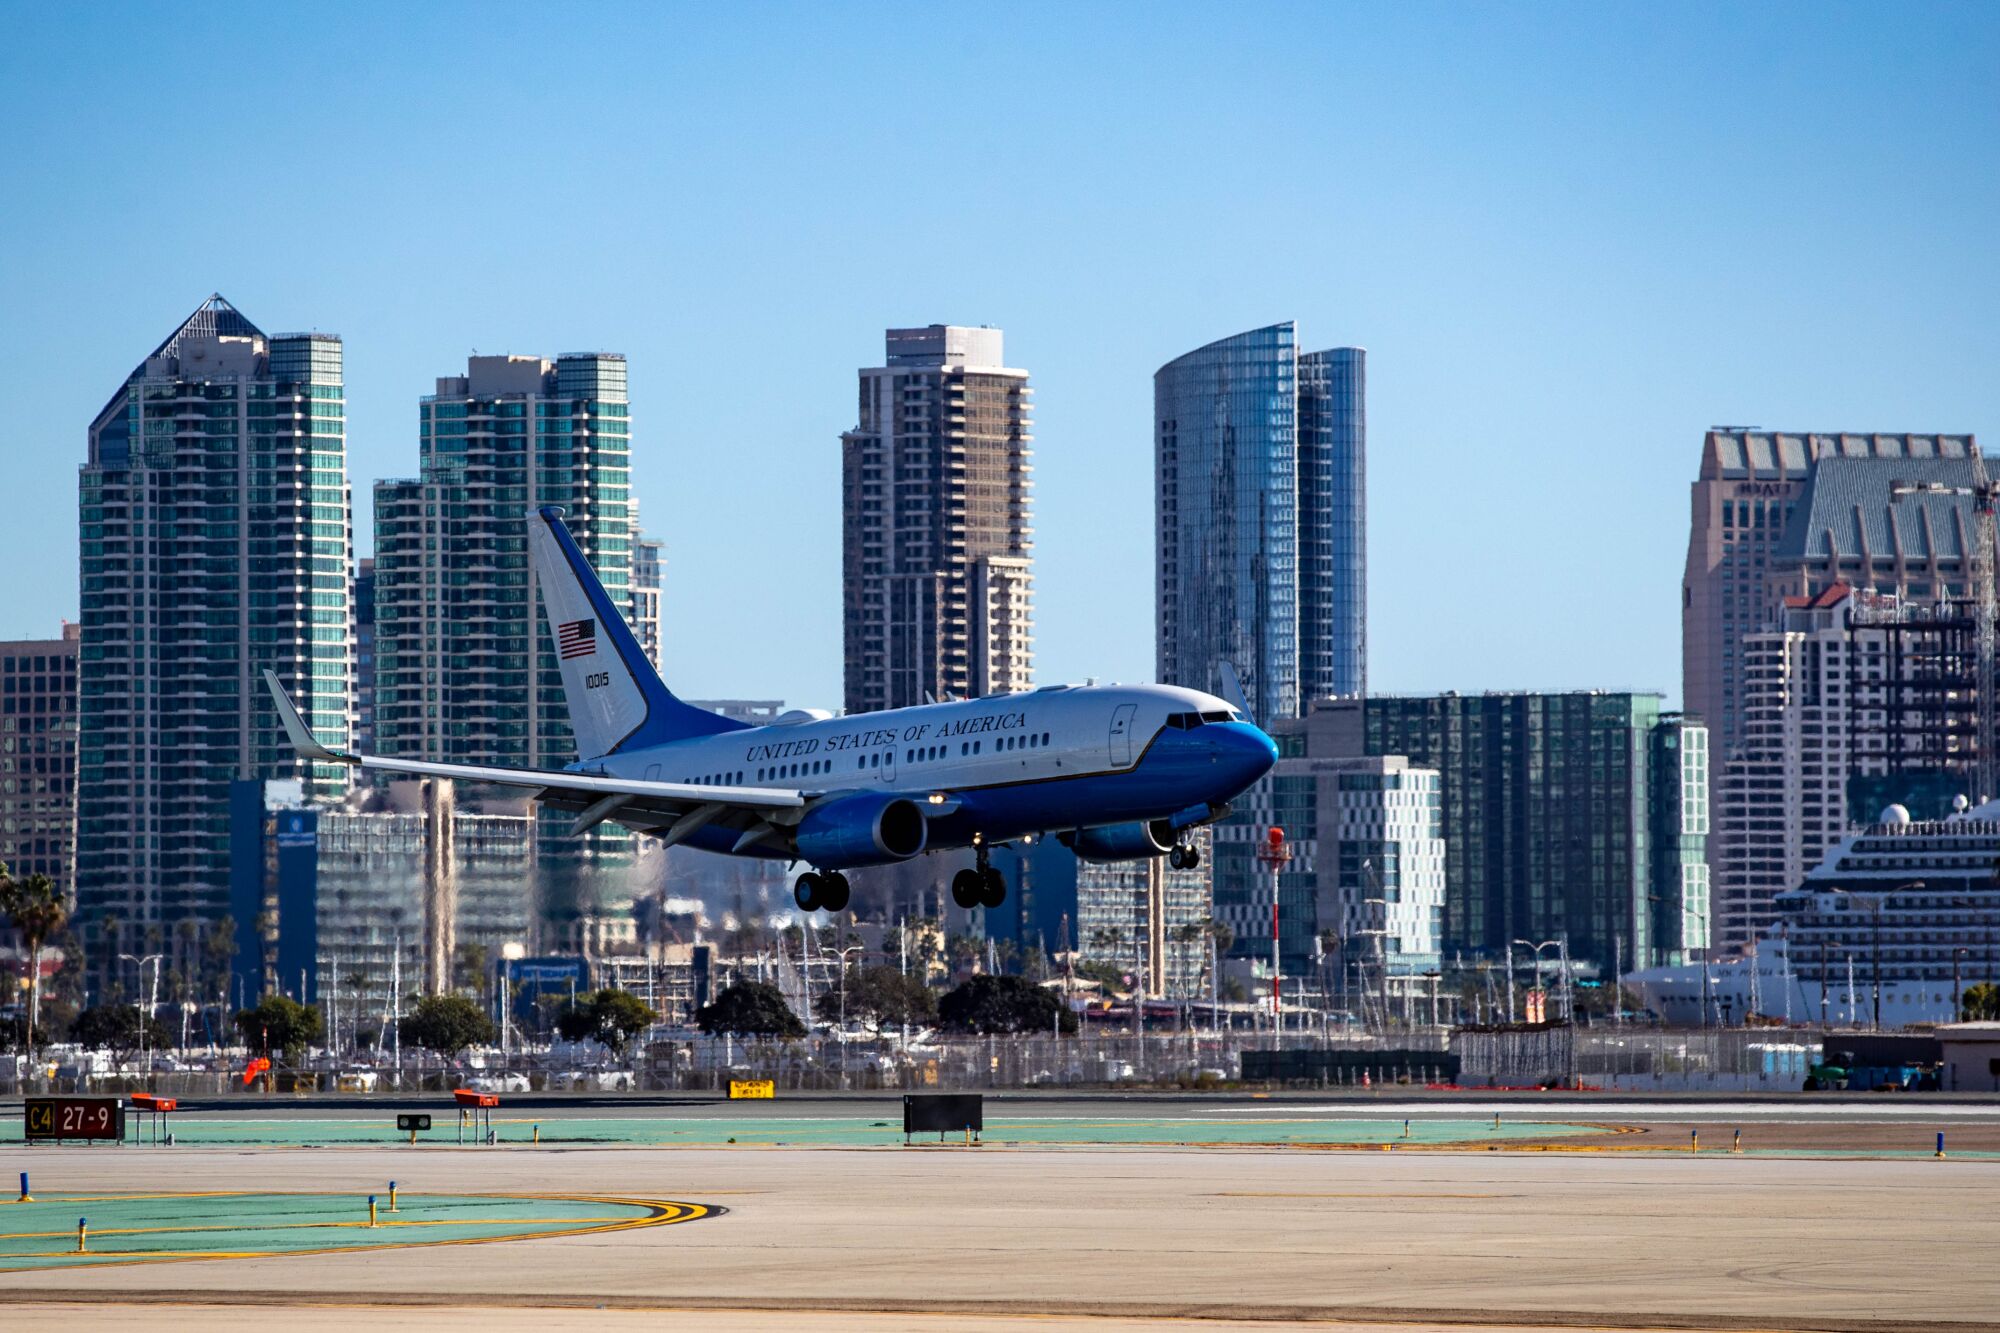 Executive One Foxtrot aircraft, carrying First Lady Dr. Jill Biden, lands at Signature Flight Support airport.